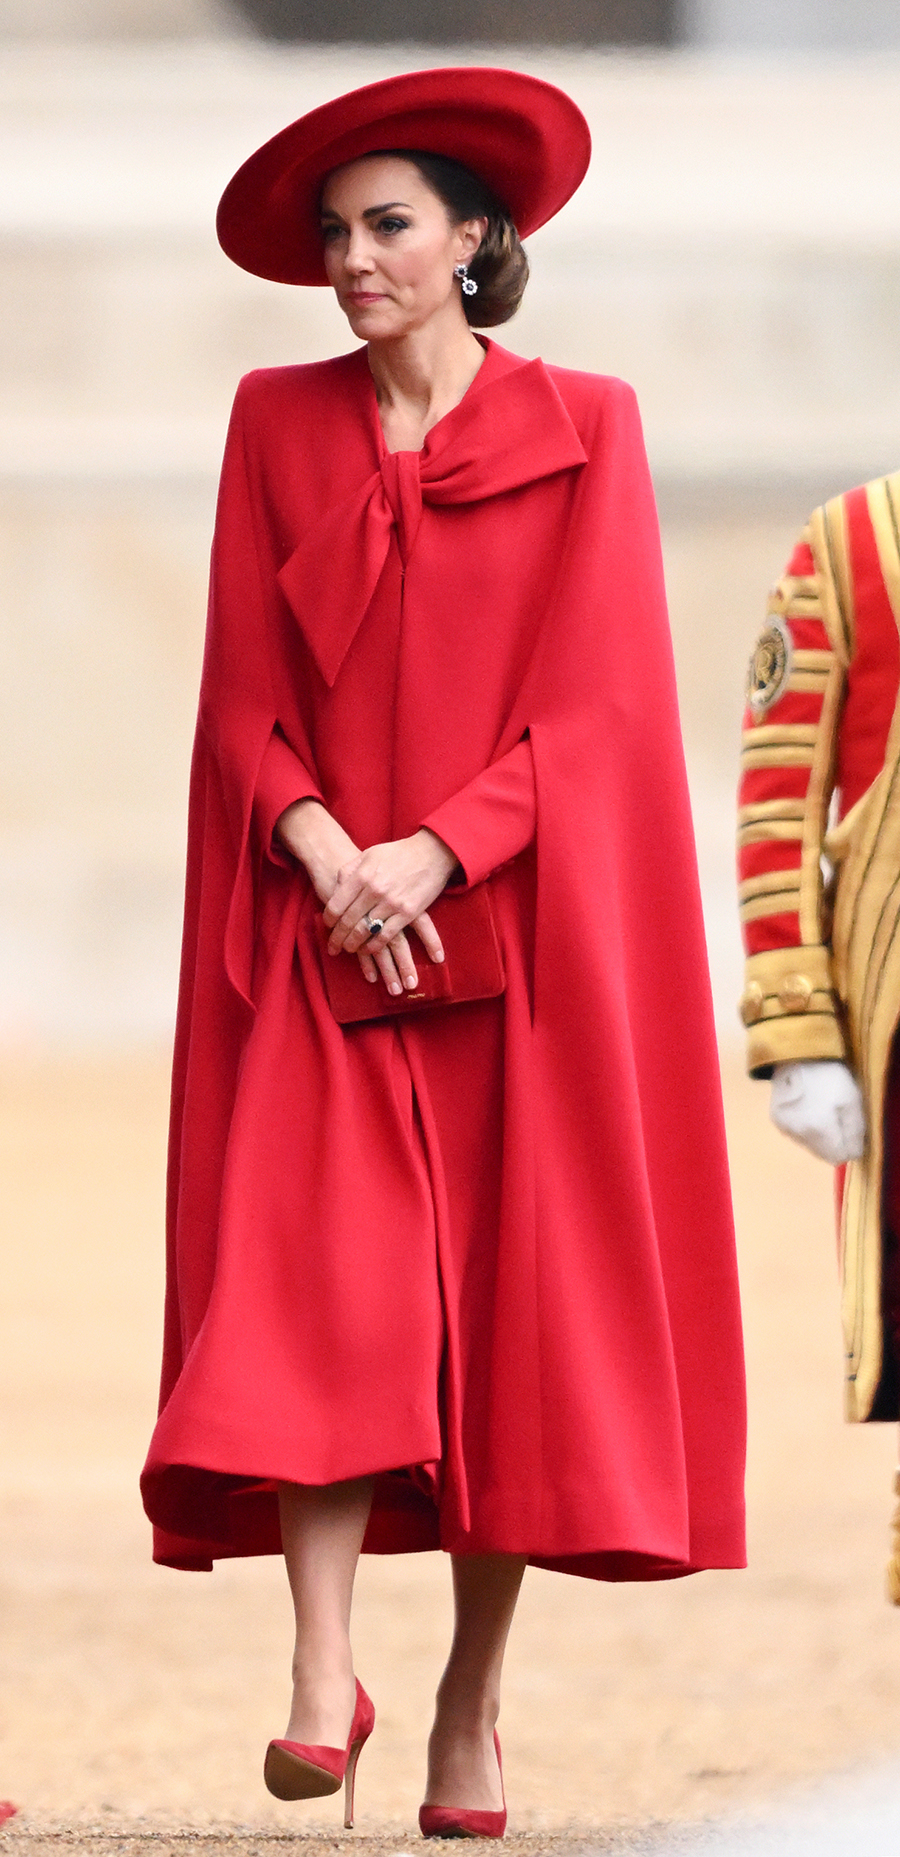 Catherine, Princess of Wales